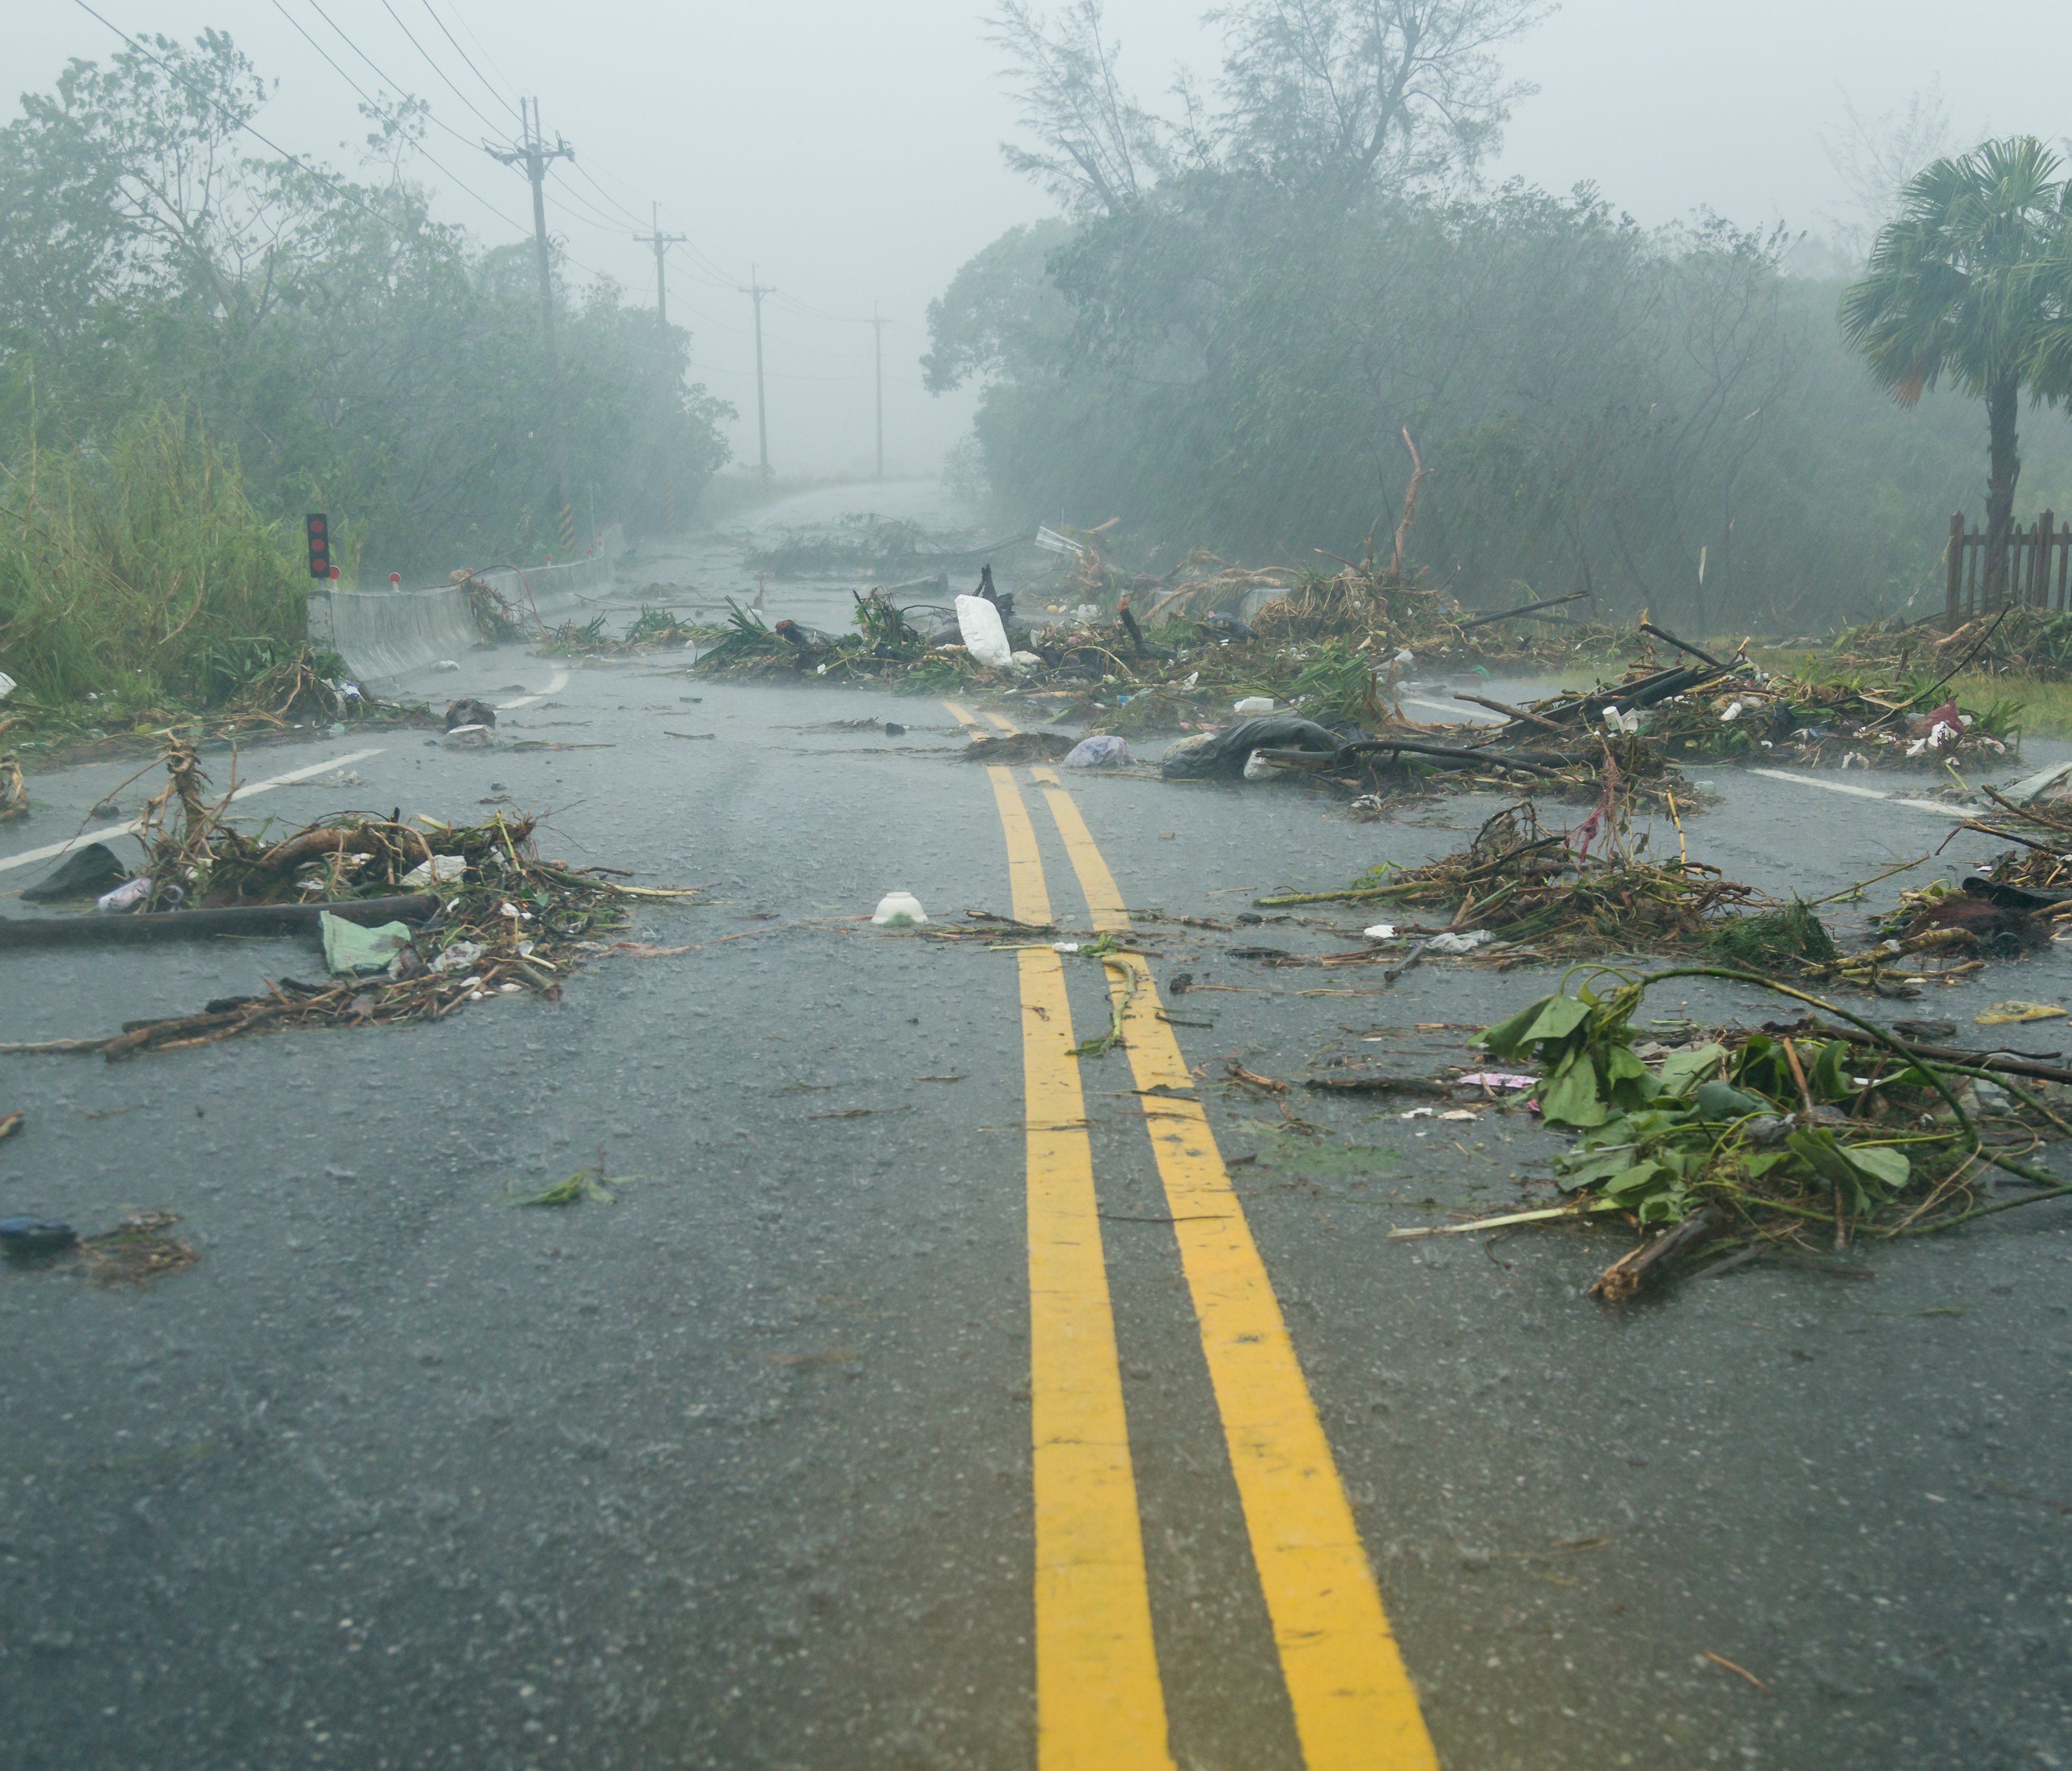 Debri blocking road during a natural disaster